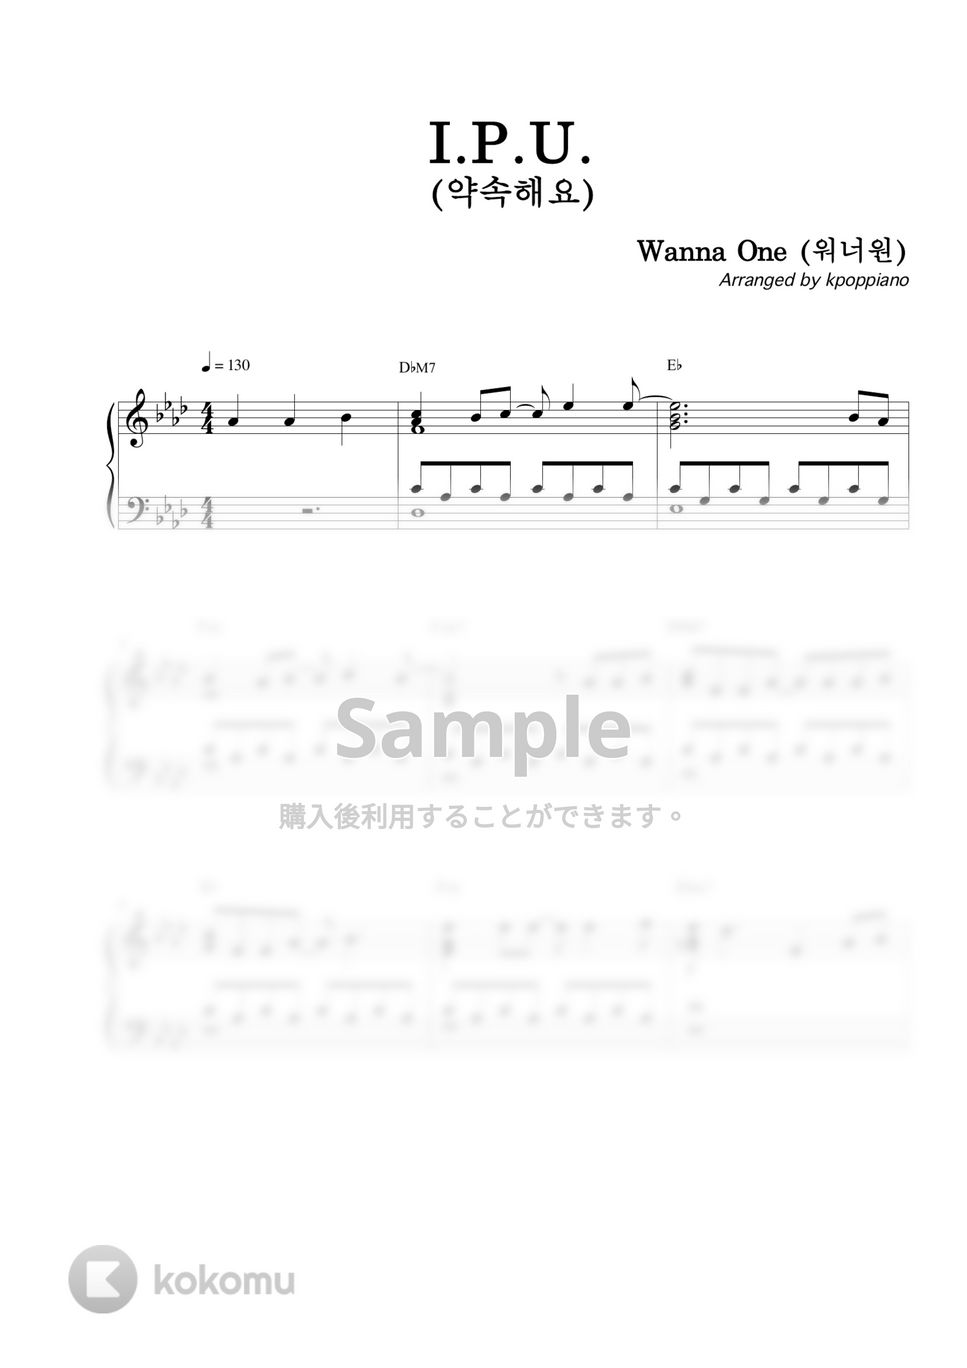 Wanna One - 約束する (I.P.U.) by KPOP PIANO